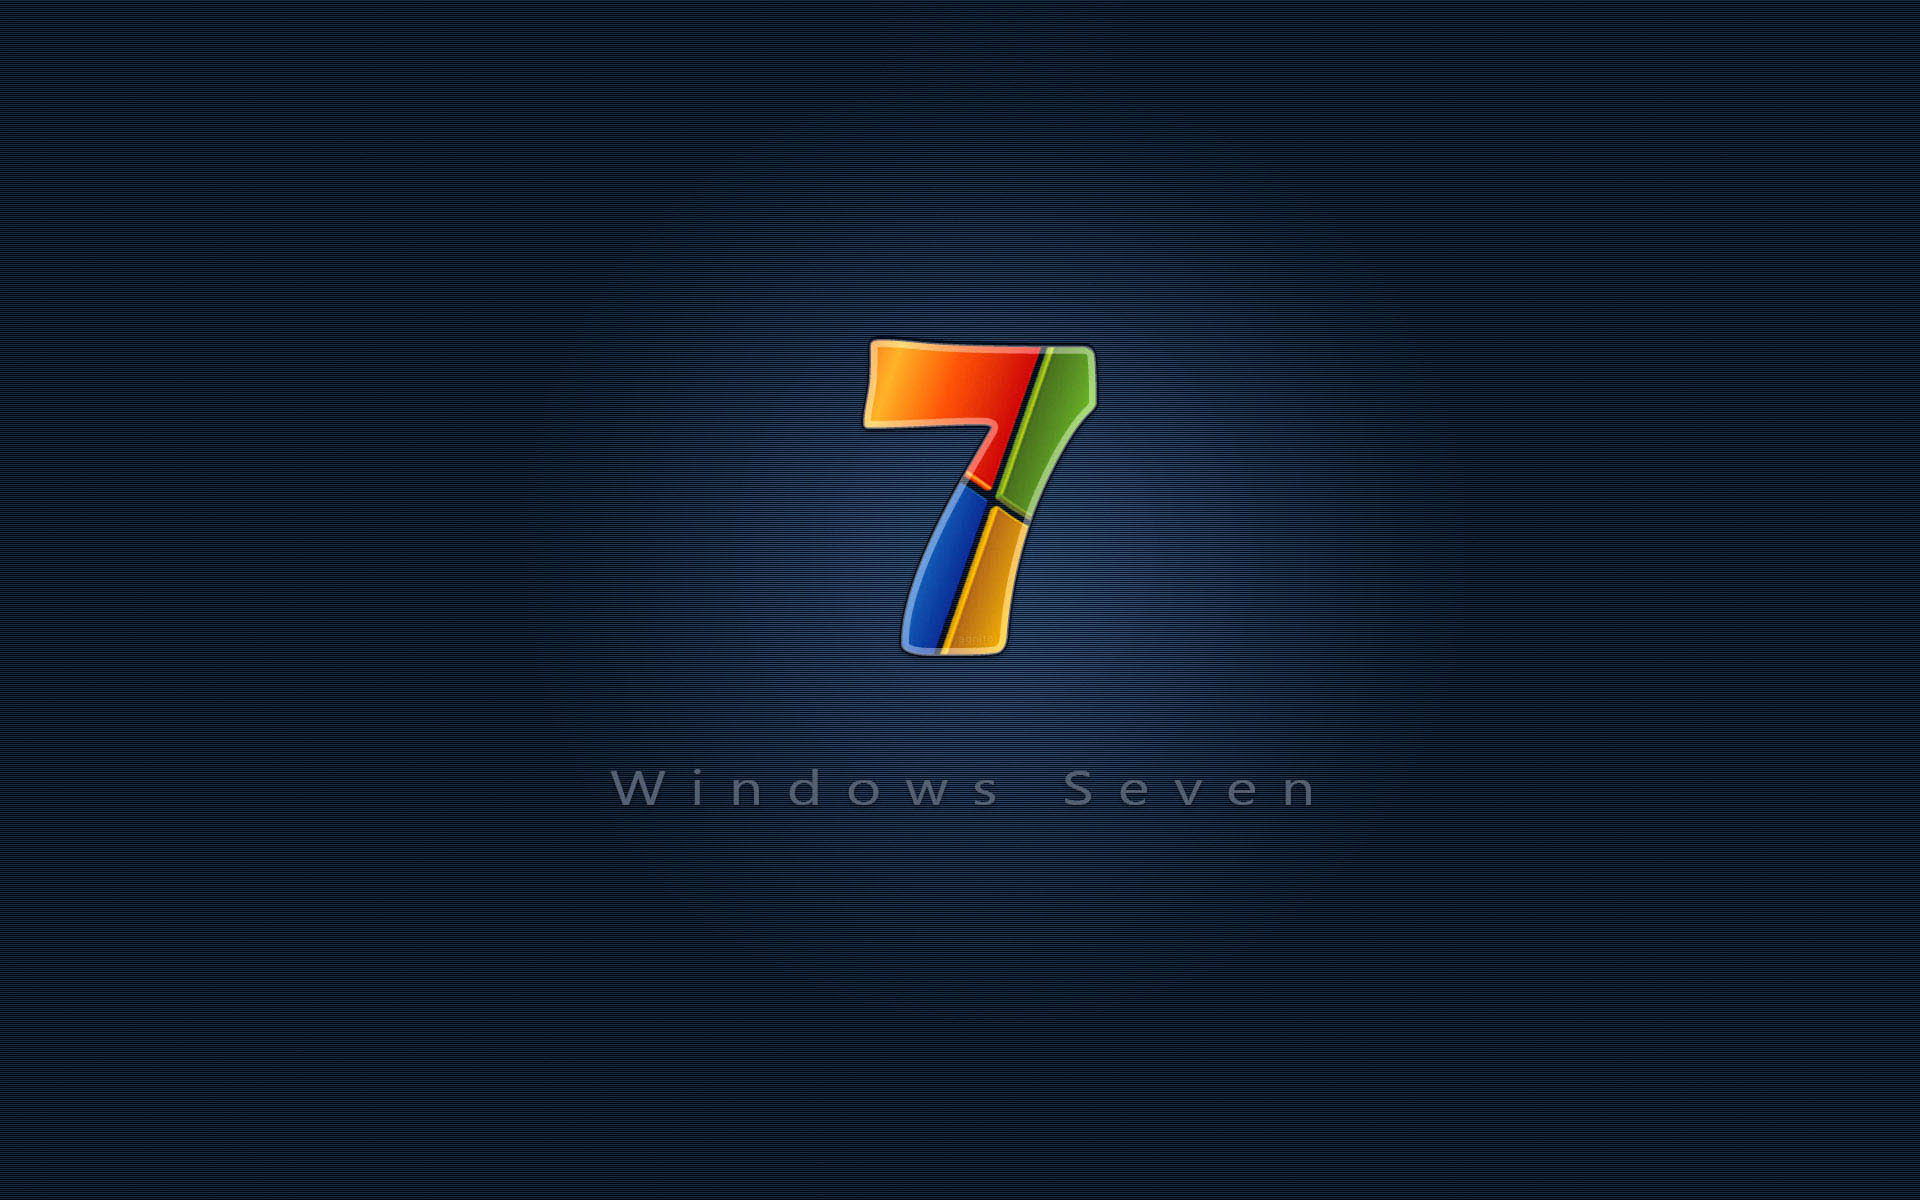 mac desktop themes for windows 7